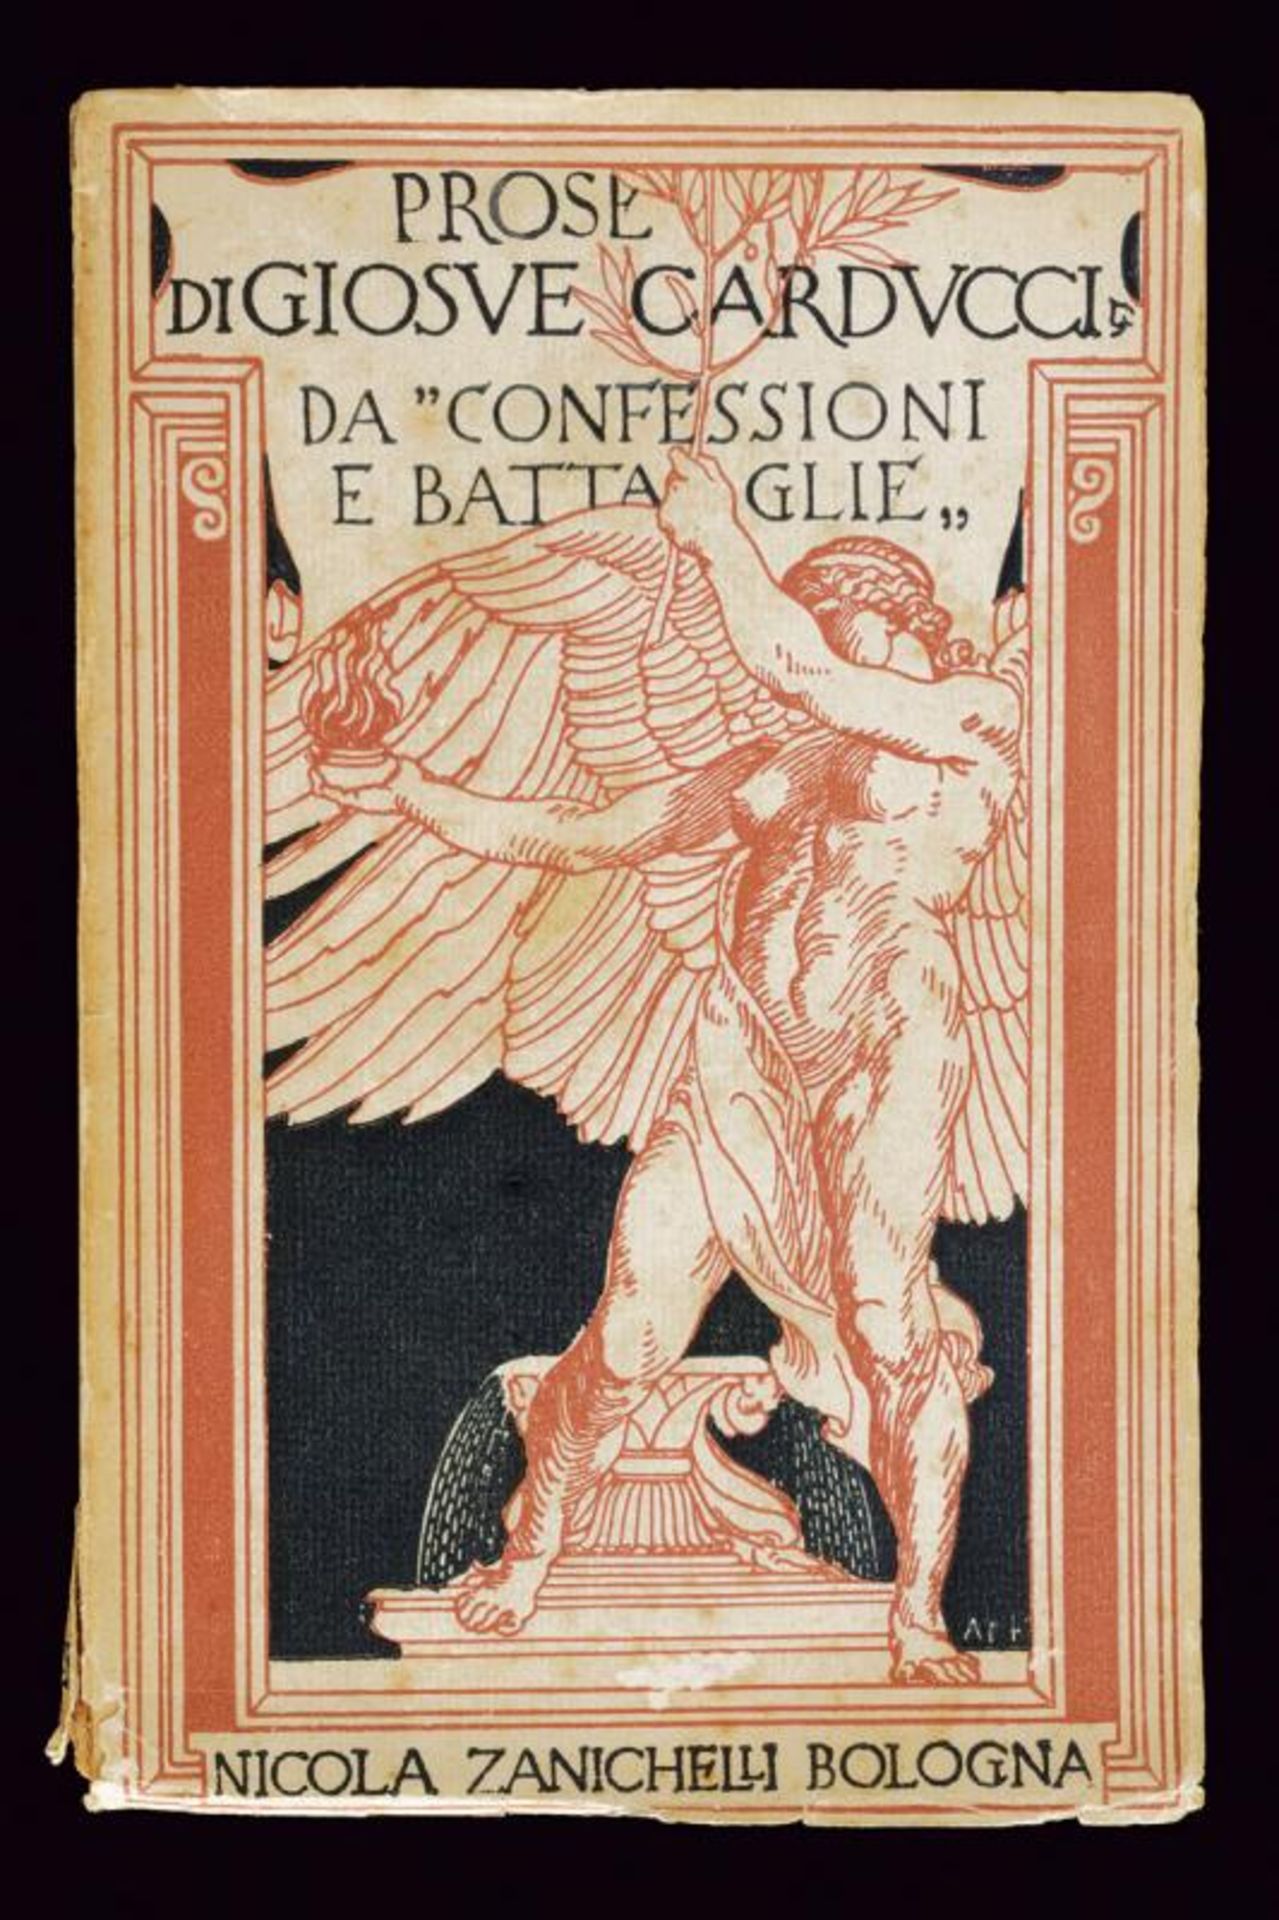 D'Annunzio, Gabriele - a dedication on the volume 'Confessioni e Battaglie' by G. Carducci